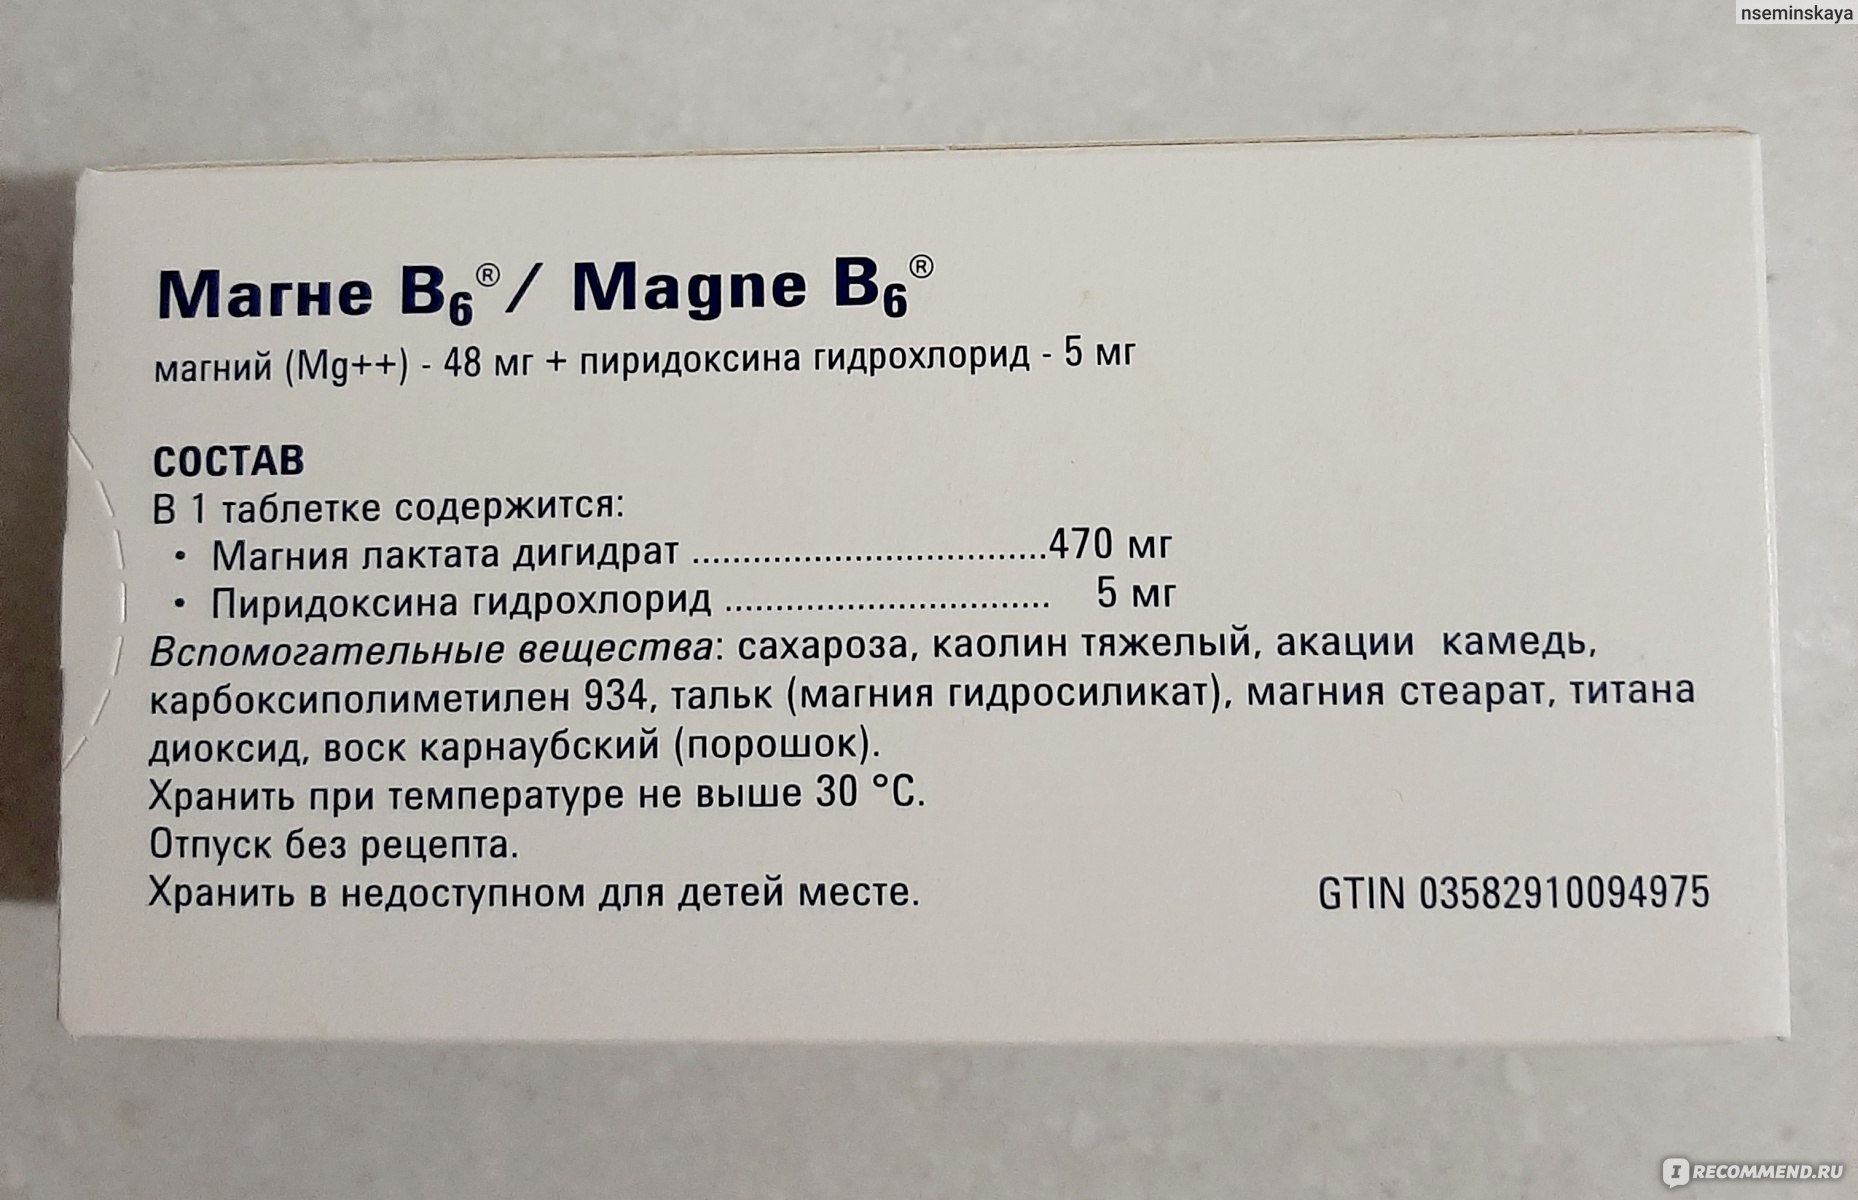 Магний таблетки отзывы врачей. Магний б6 + пиридоксина гидрохлорид. Магне в6 магний пиридоксина гидрохлорид. Магний б6 (магний лактат+пиридоксина гидрохлорид. Магния лактат 470 мг пиридоксина гидрохлорид 5 мг.